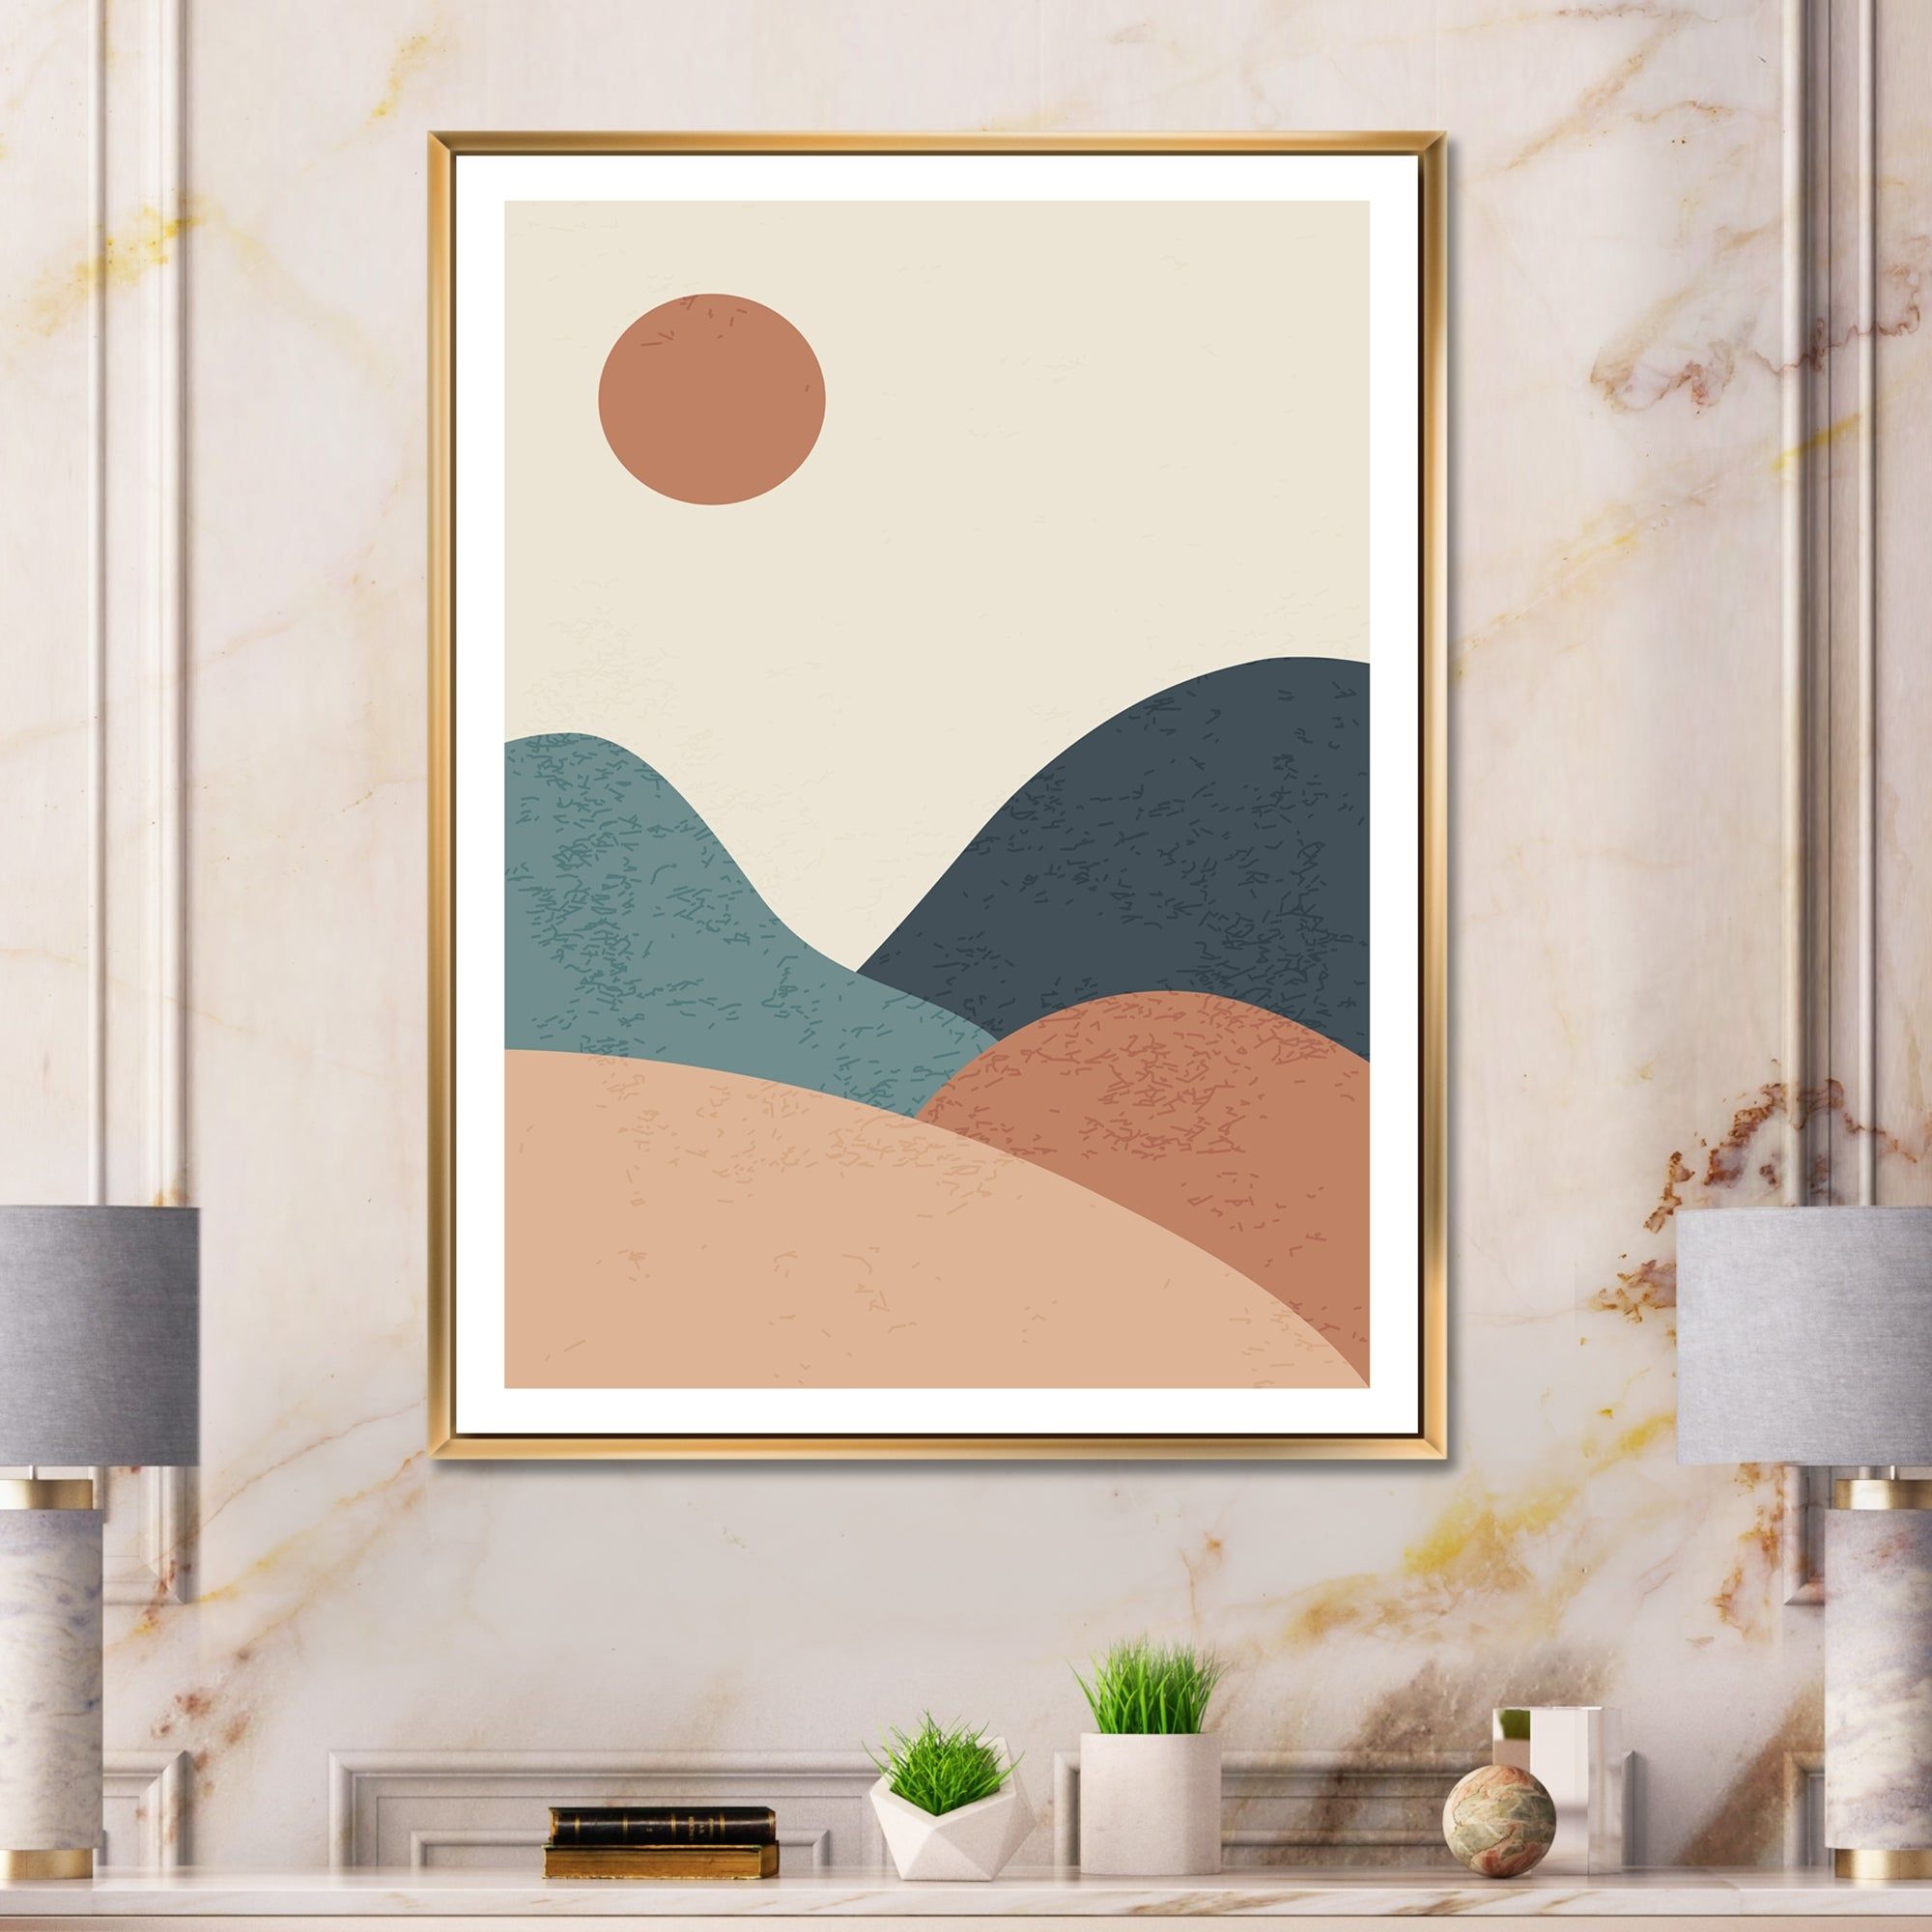 Designart 'vintage Minimalist Landscape With Lake At Sunset' Modern Framed  Canvas Wall Art Print – Overstock – 33797539 With Minimalist Landscape Wall Art (View 5 of 15)